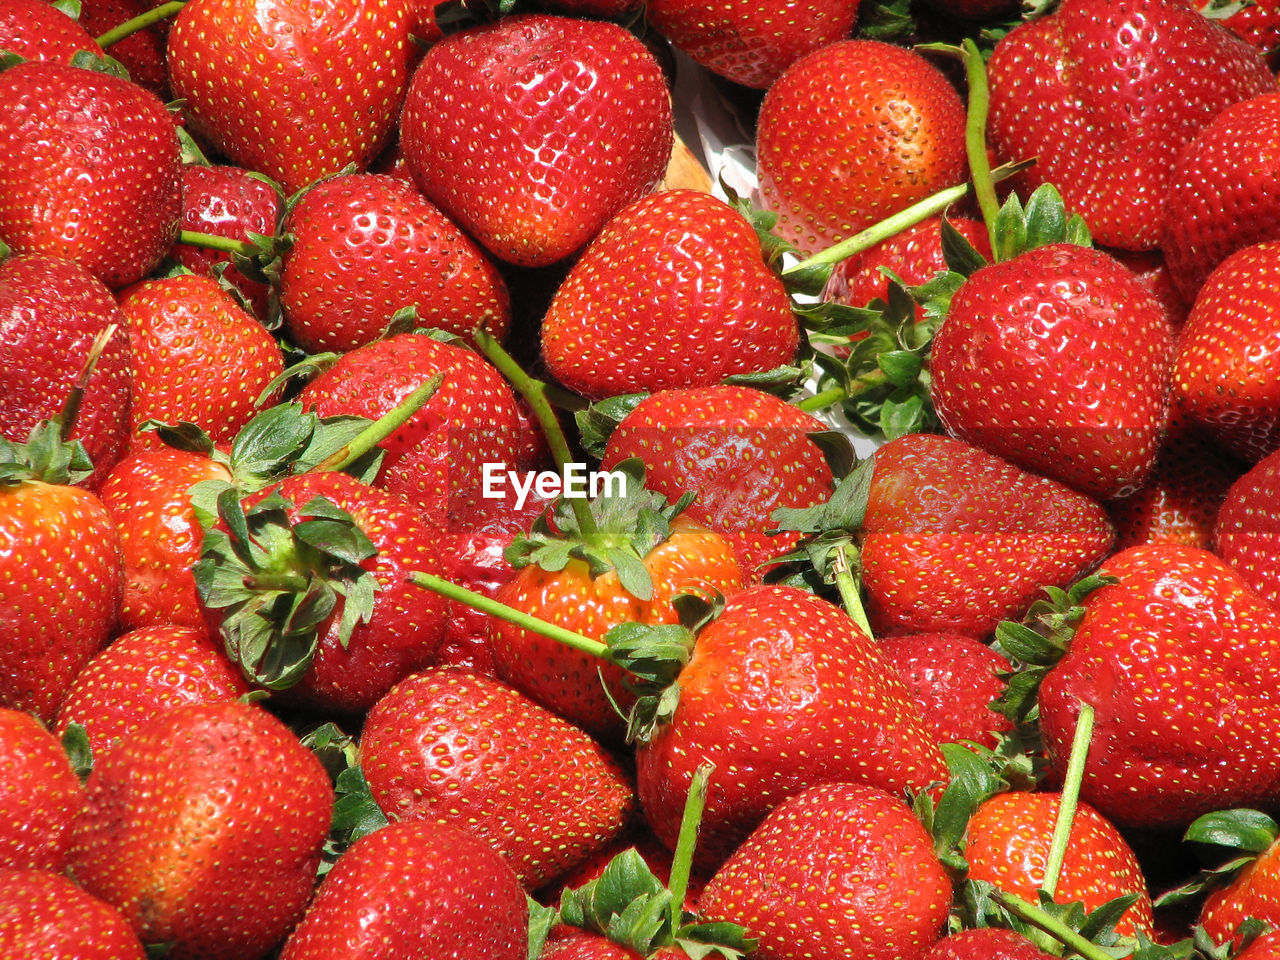 Brilliant farm fresh ripened strawberries at a farm stand.